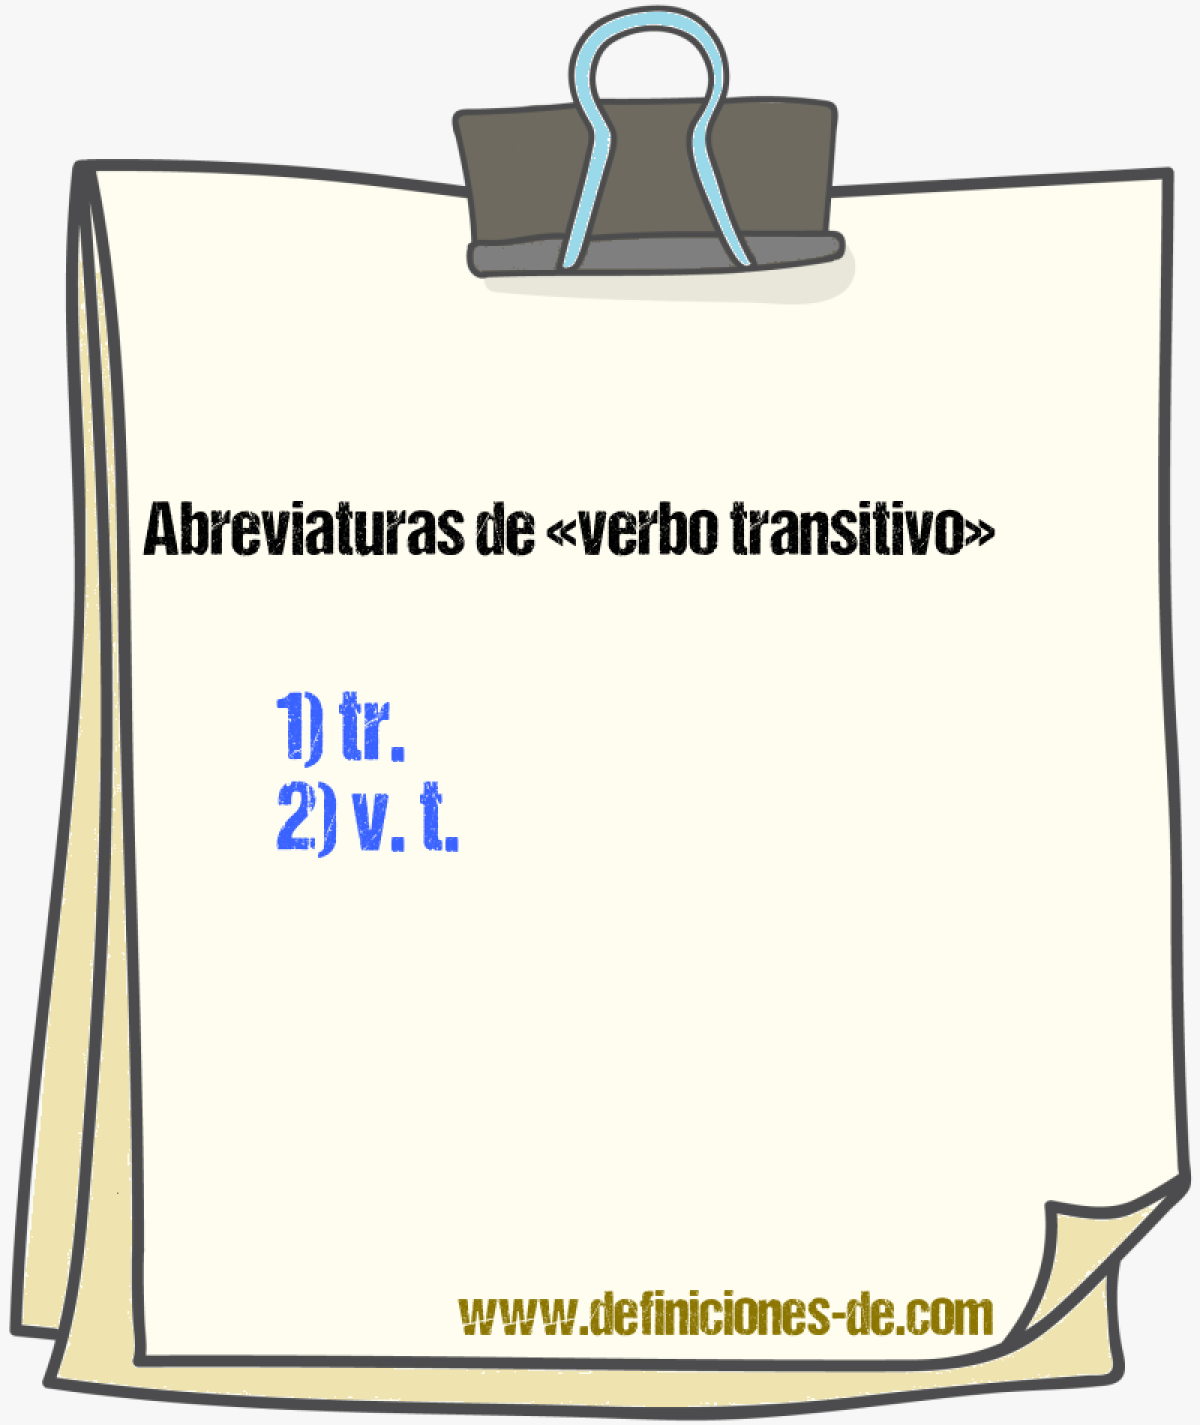 Abreviaturas de verbo transitivo